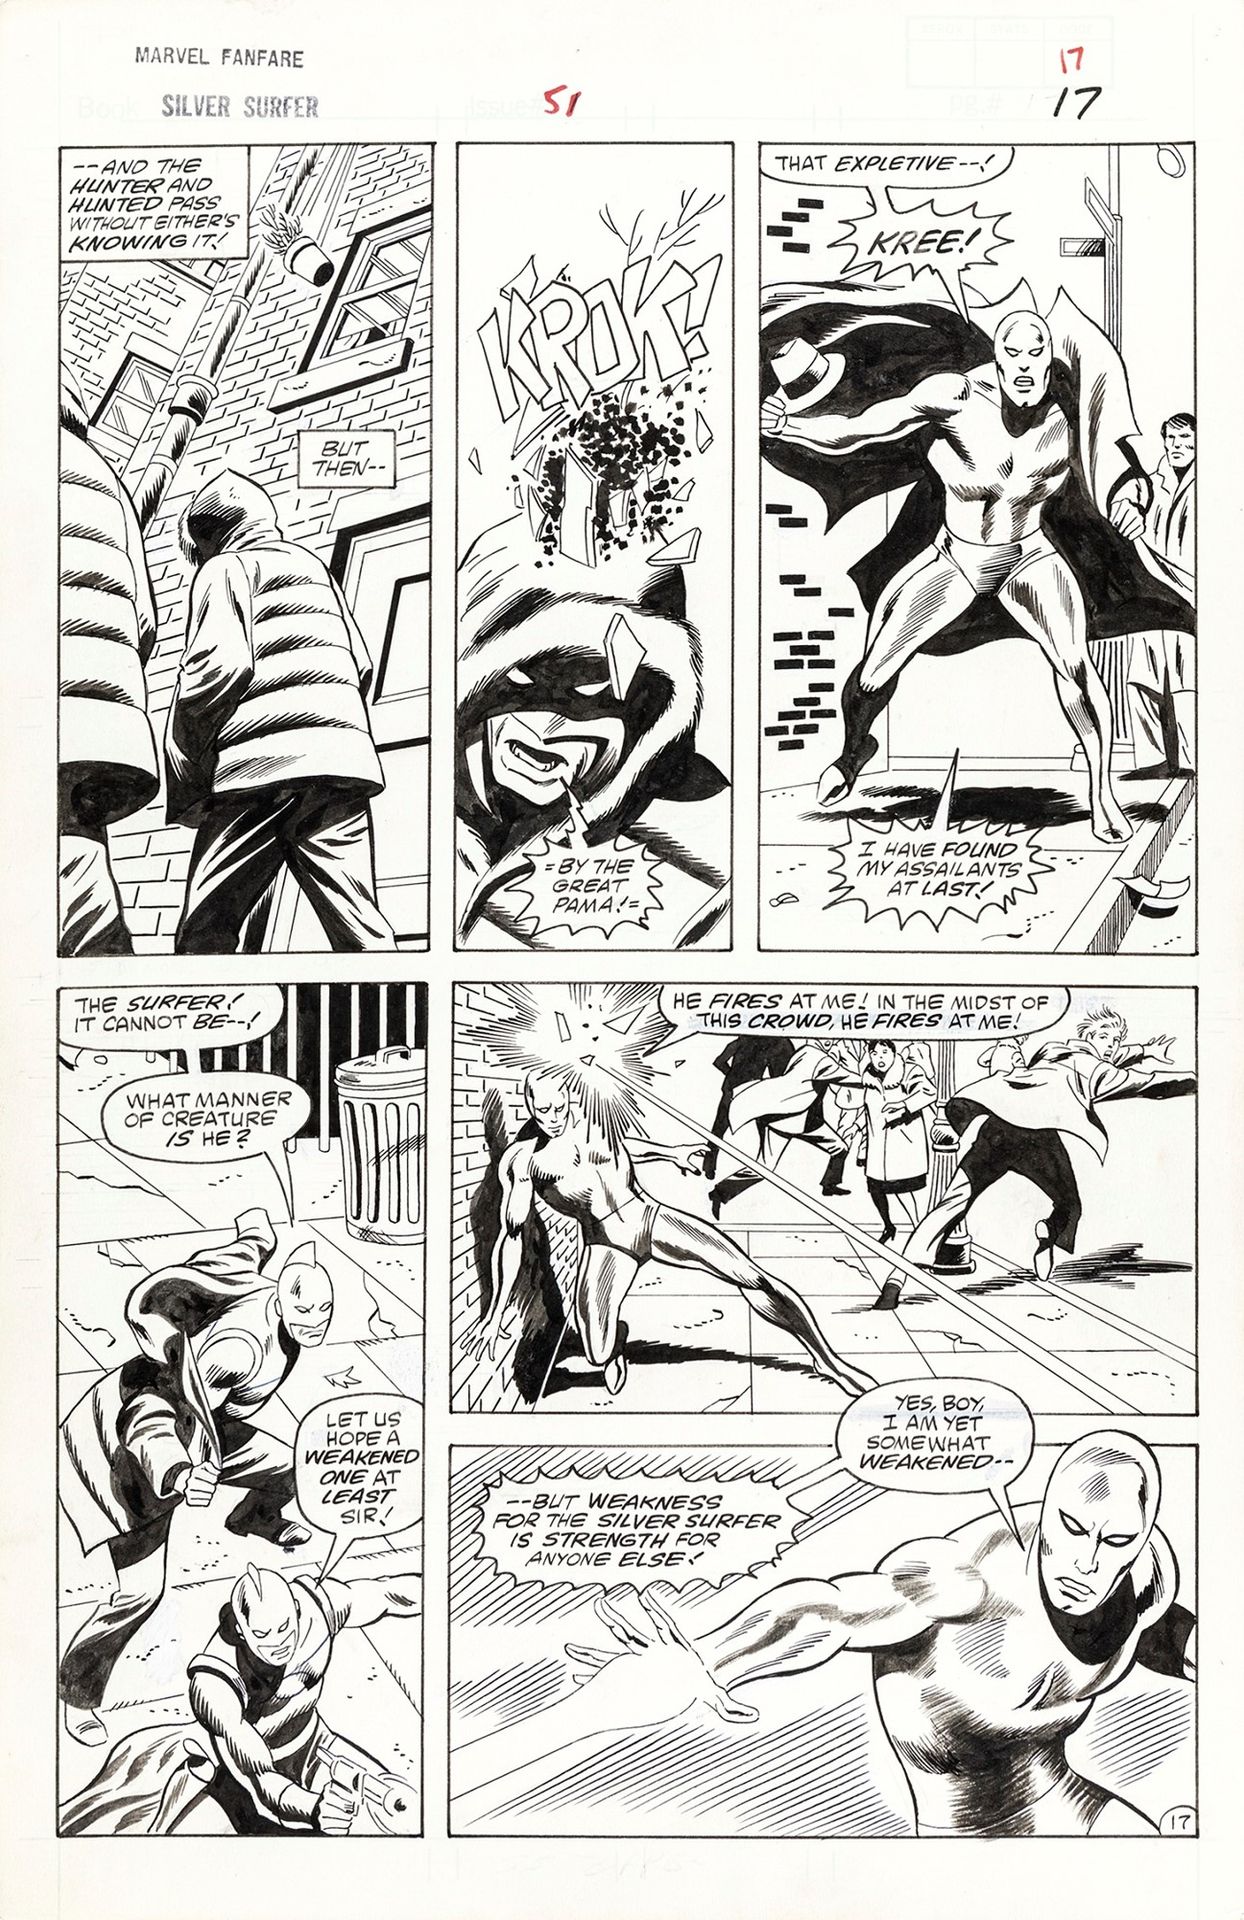 John BUSCEMA Marvel Fanfare: Silver Surfer, 1990

lápiz y tinta sobre cartulina &hellip;